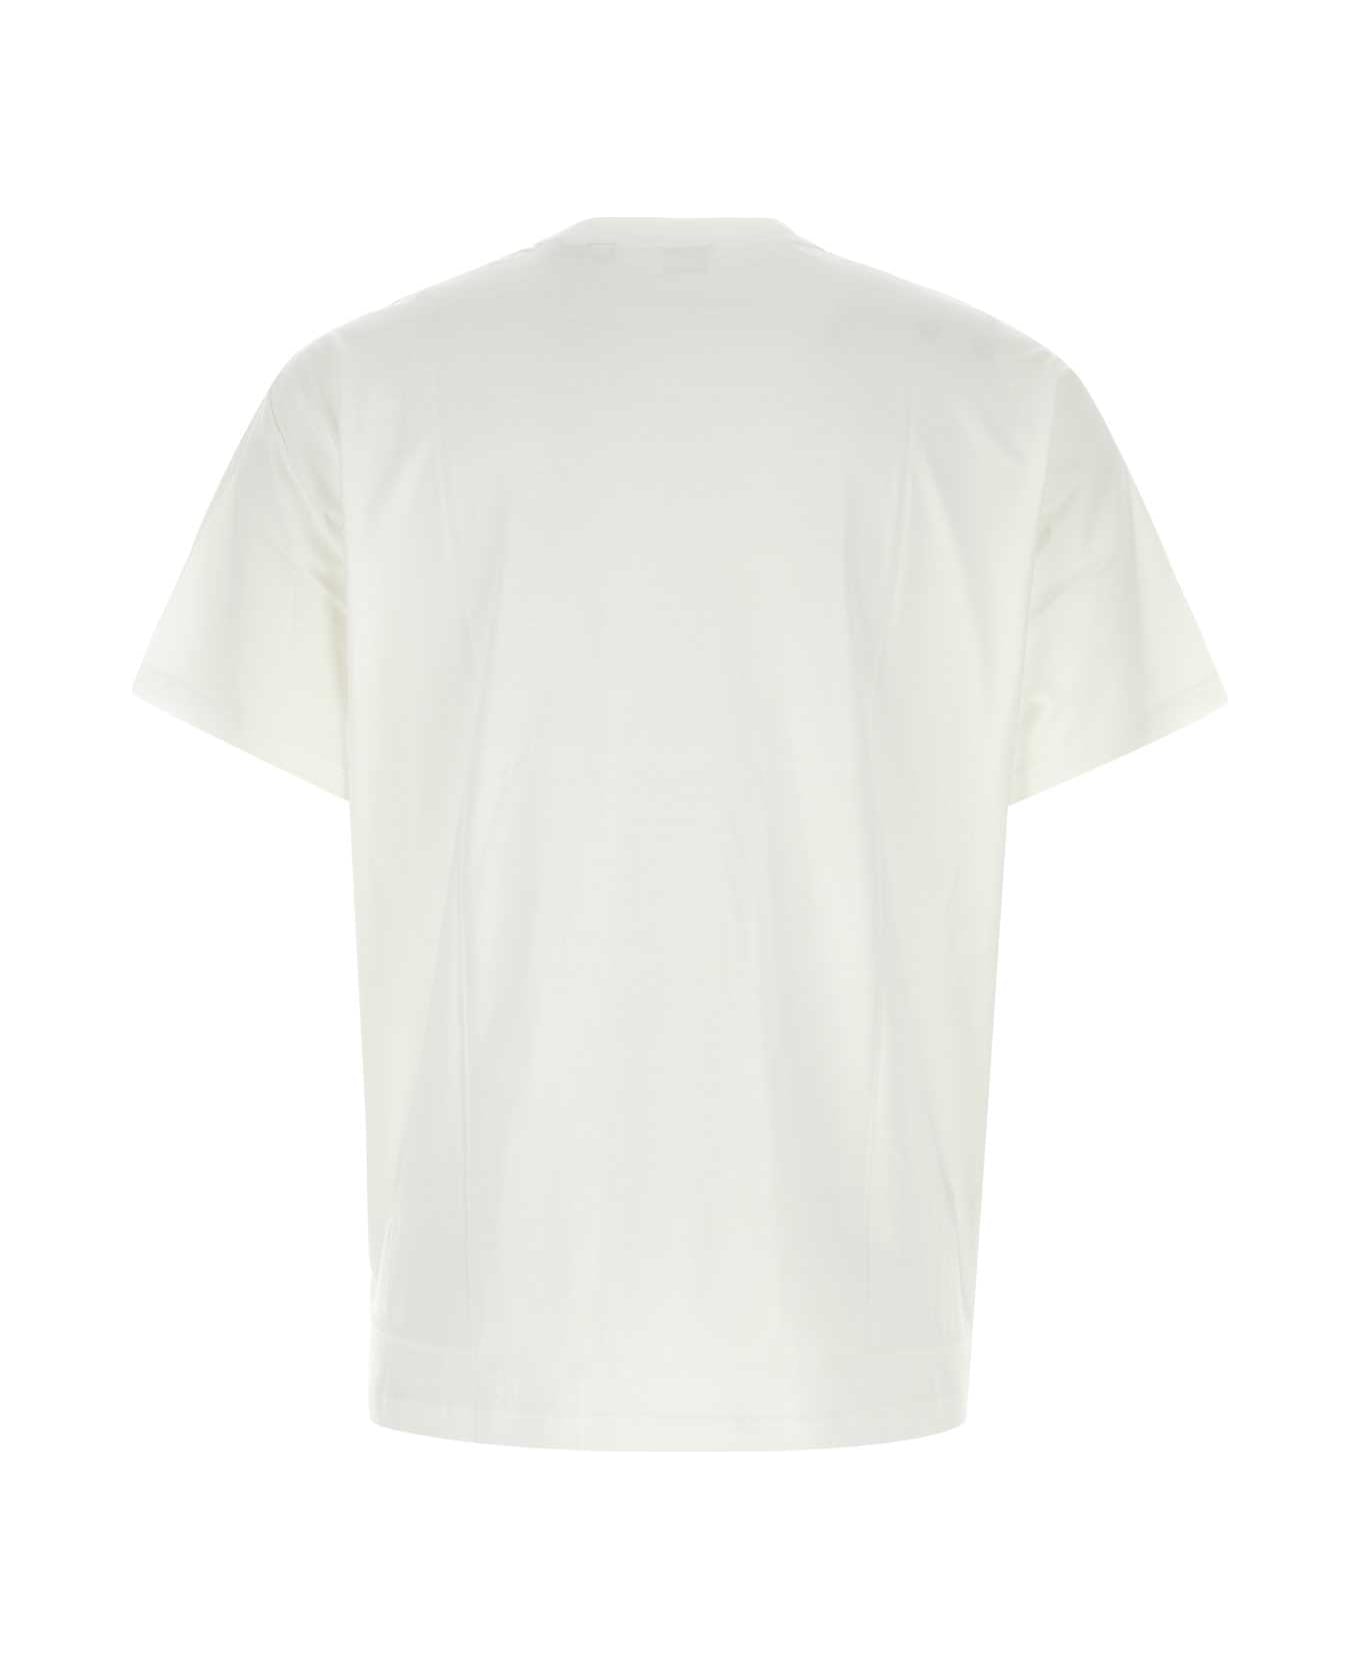 Burberry White Cotton T-shirt - WHITE